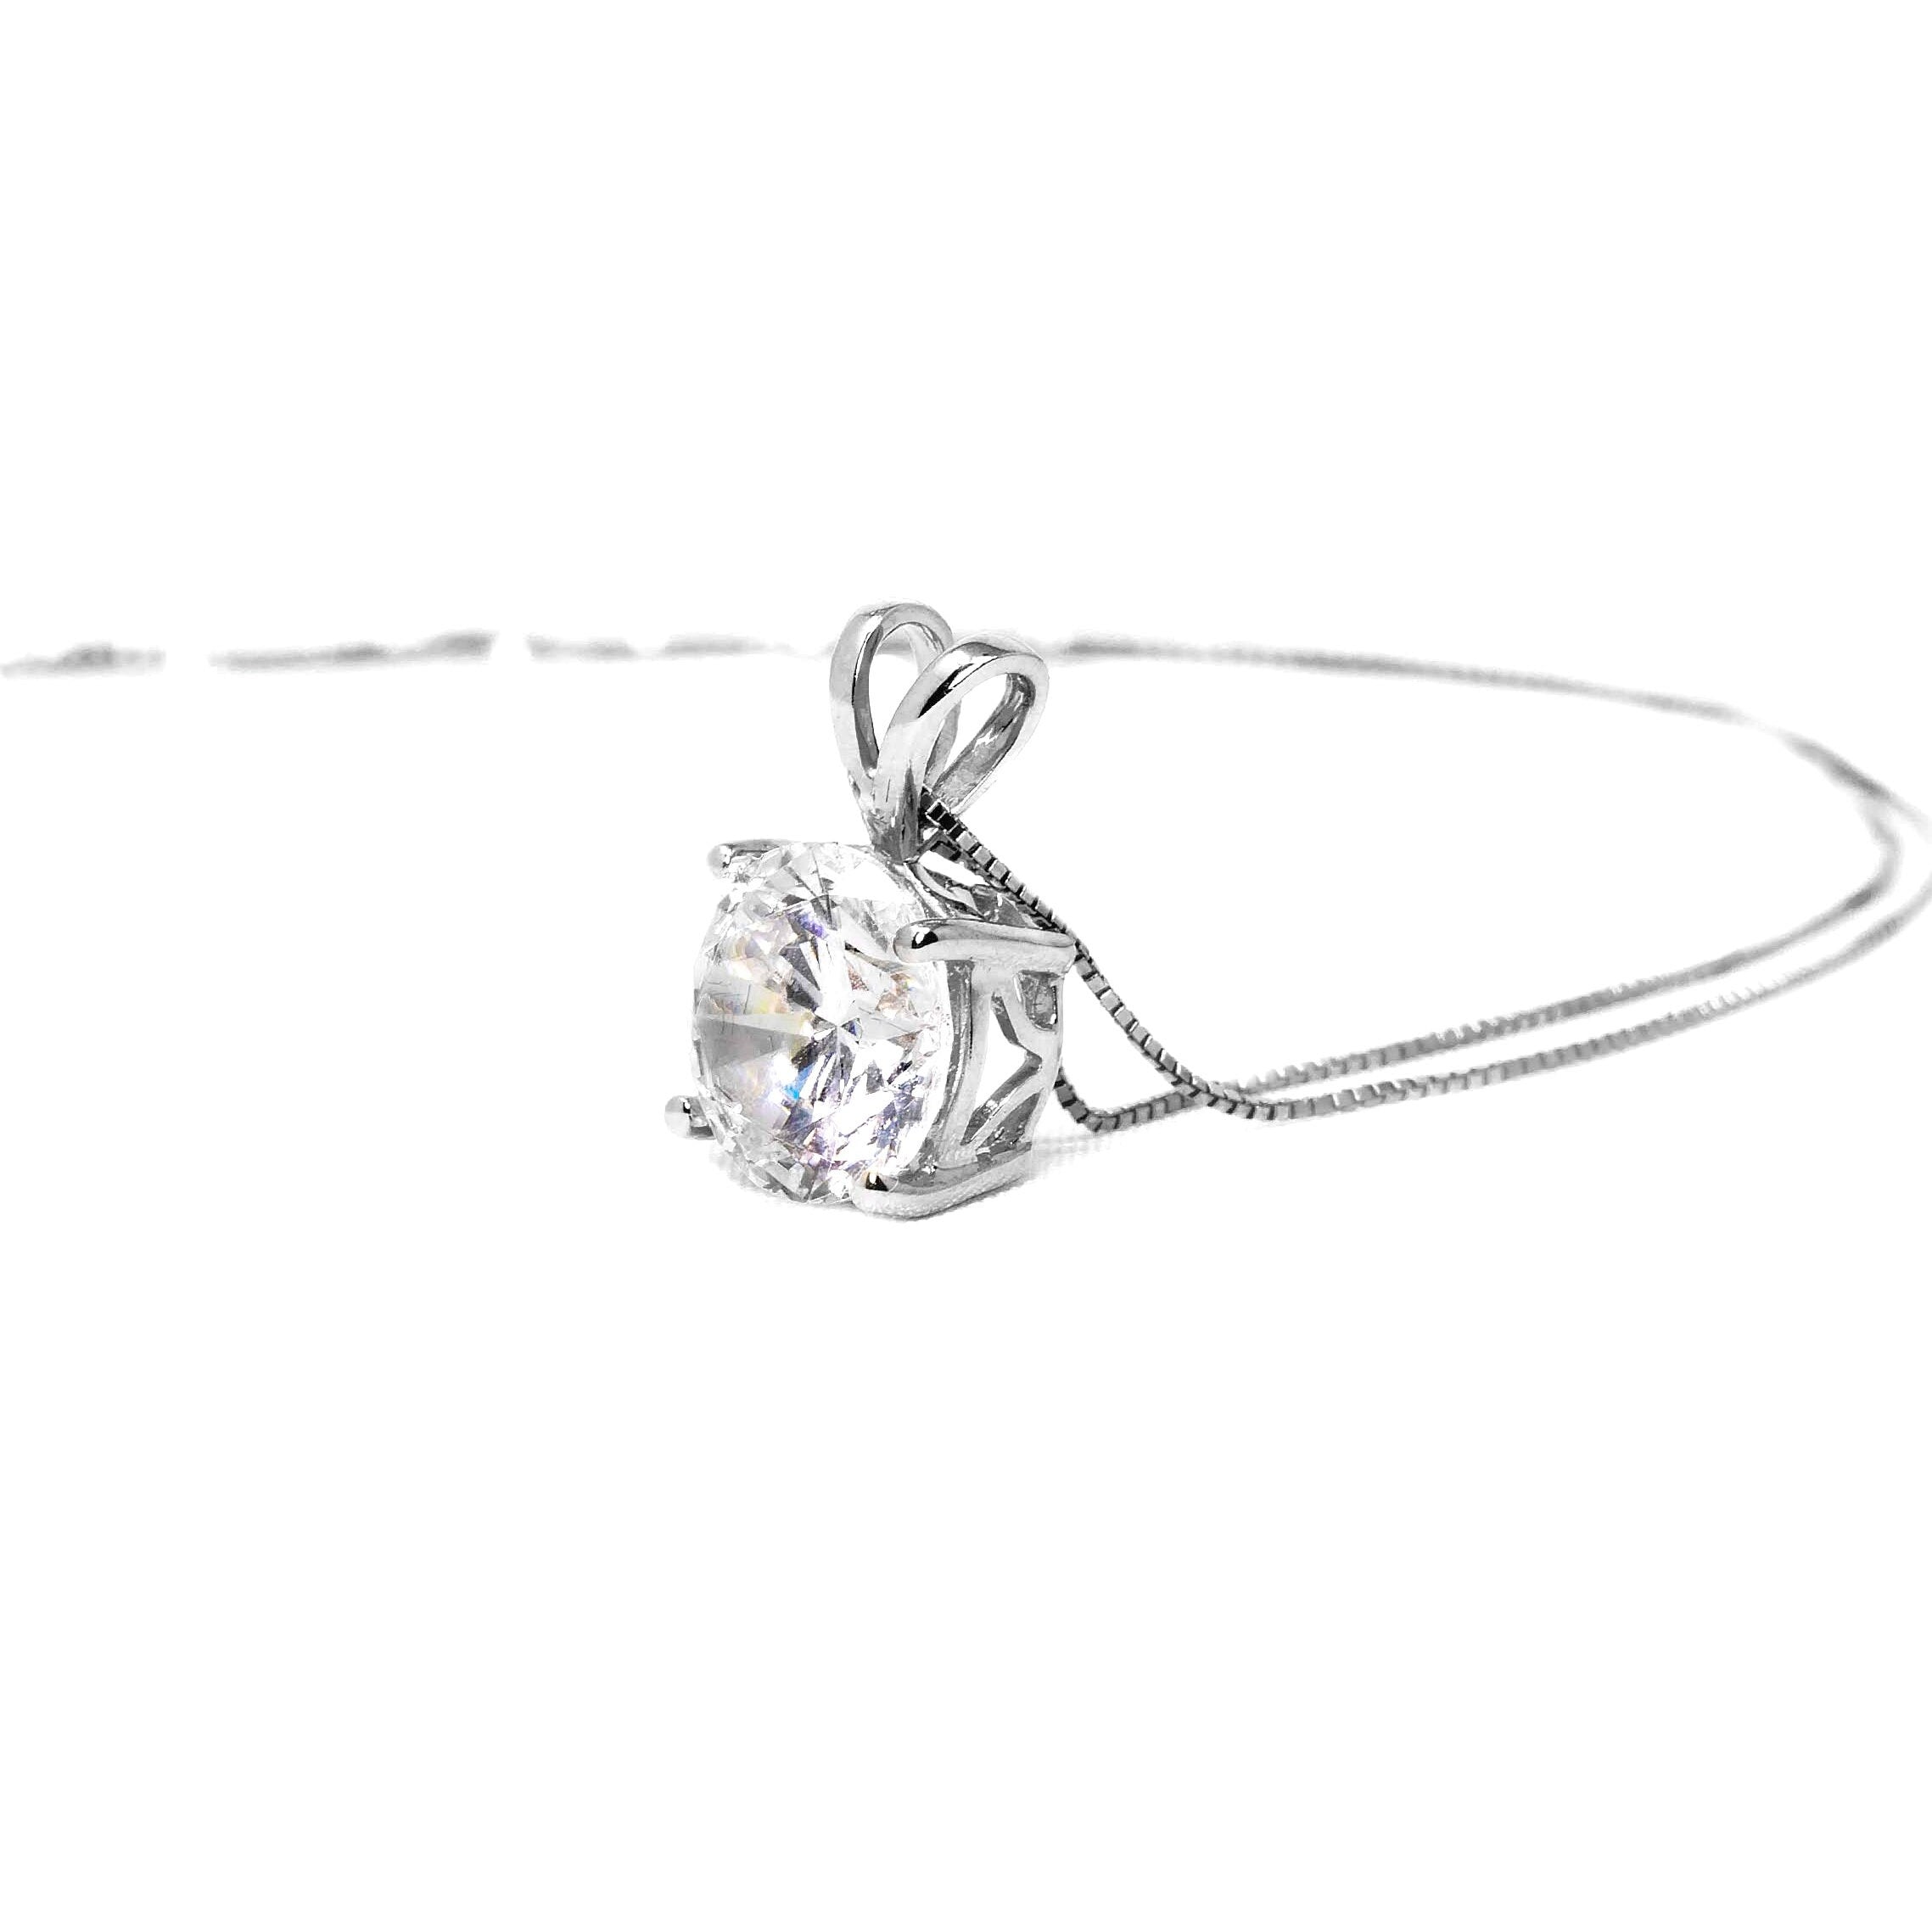 CD Diamond Pendant Necklace Silver